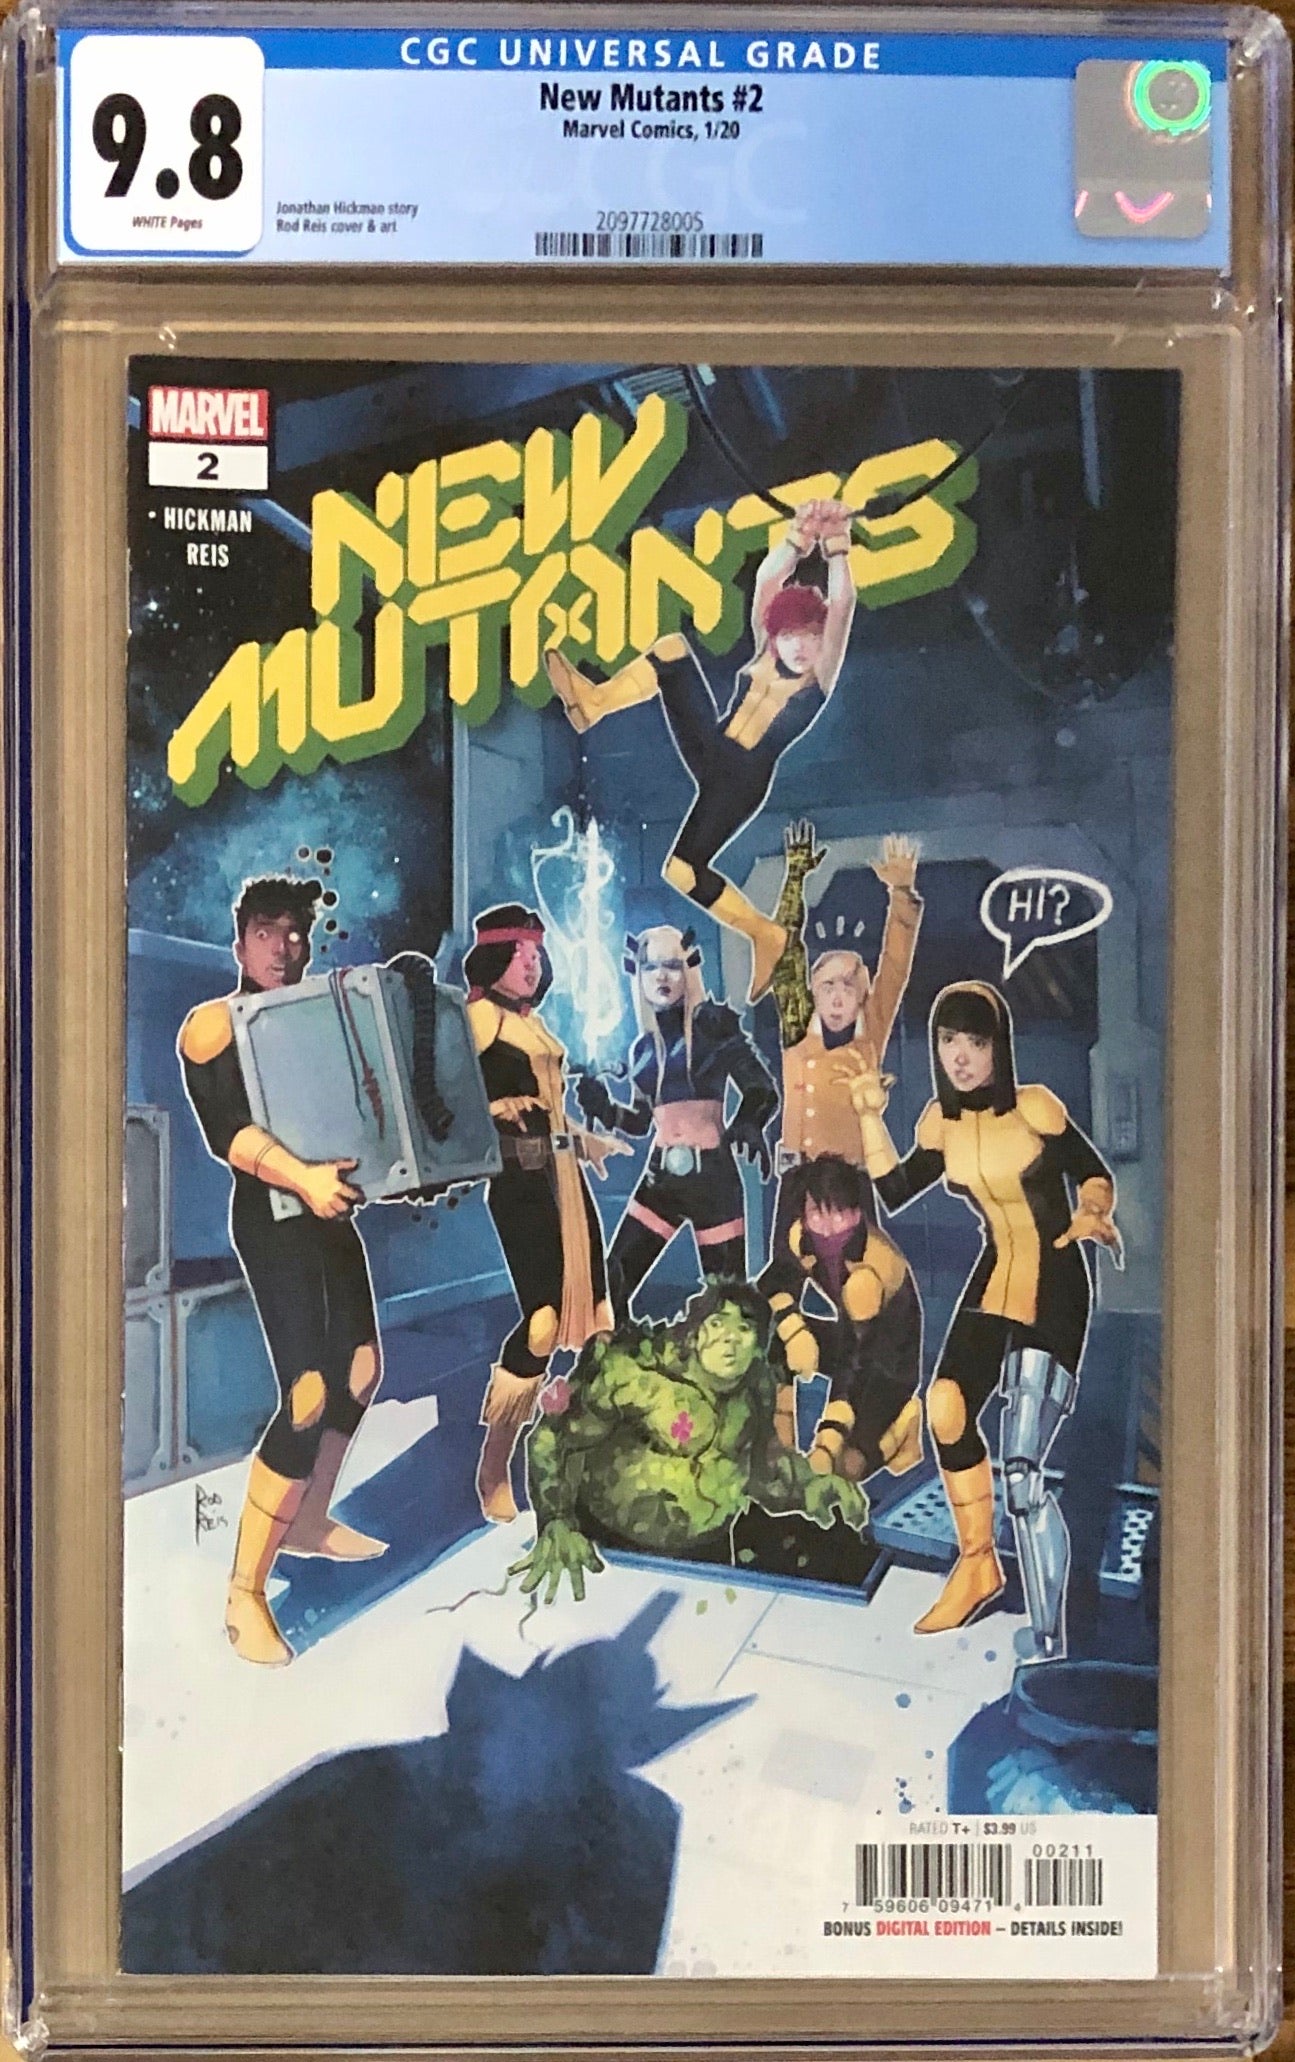 New Mutants #2 CGC 9.8 - Dawn of X!